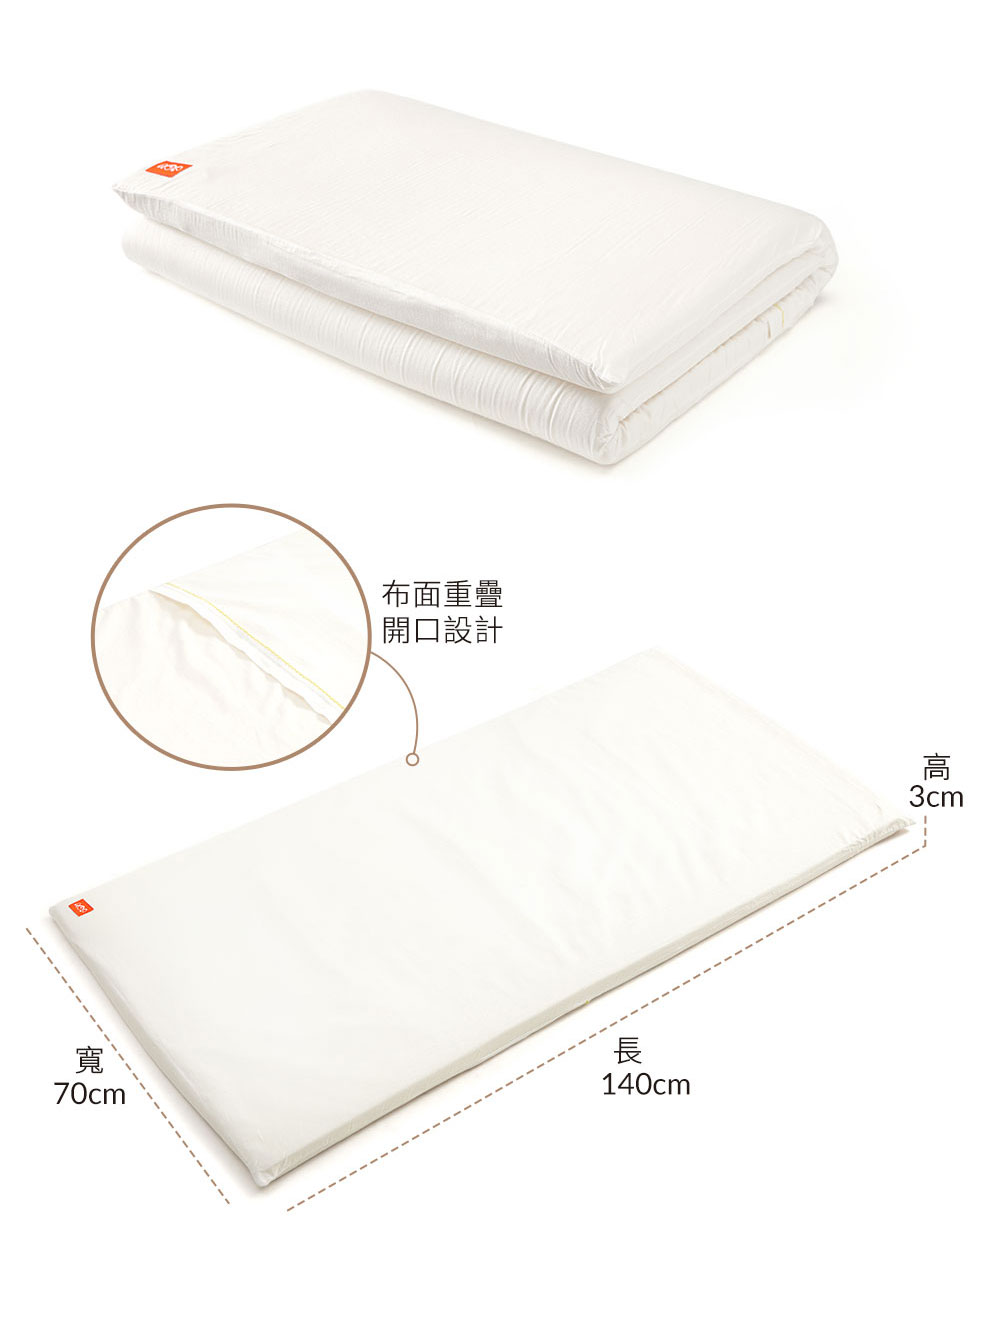 Hydrofoam 敷料親膚棉嬰兒床墊